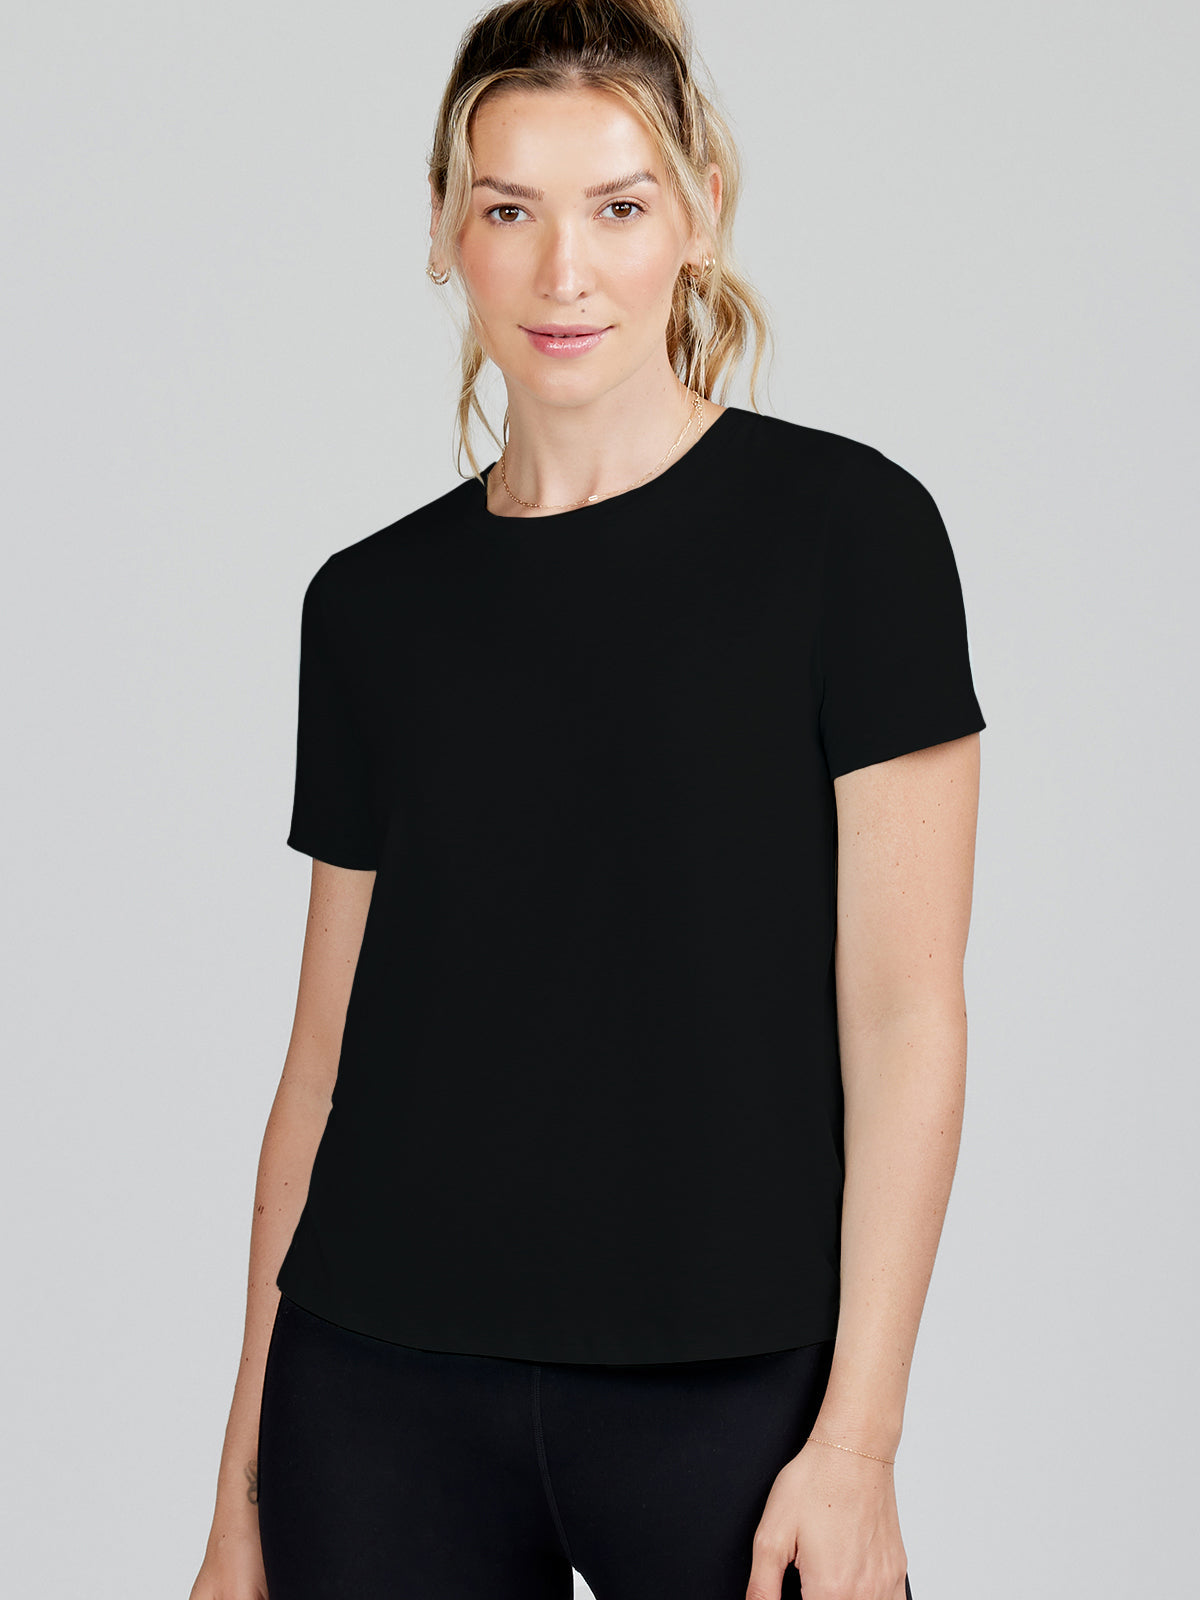 Tasc Women's All Day T-Shirt Apparel Tasc Black XSmall 